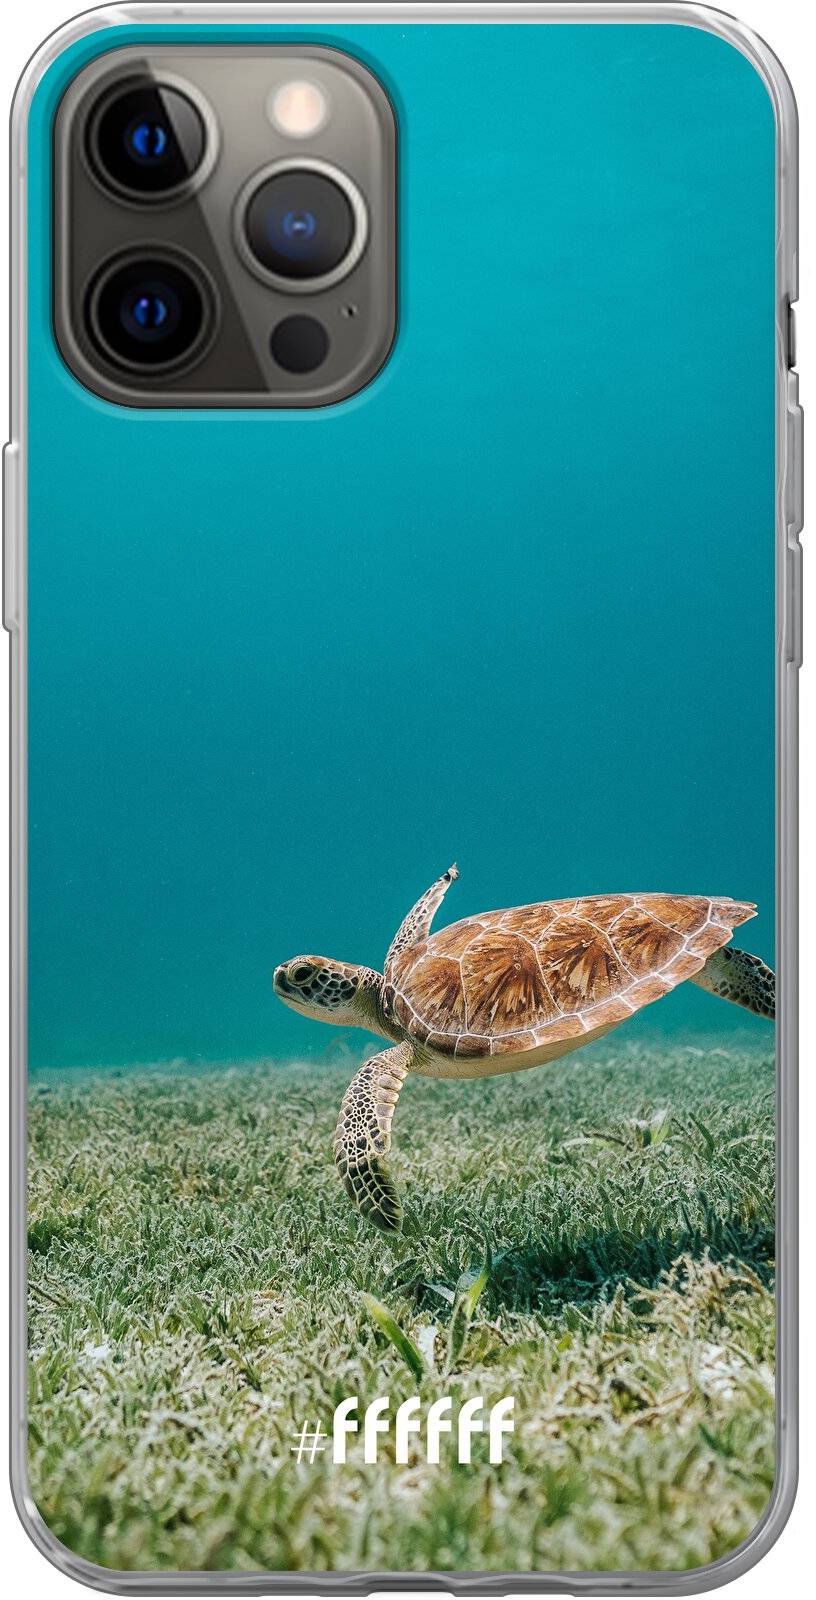 Turtle iPhone 12 Pro Max